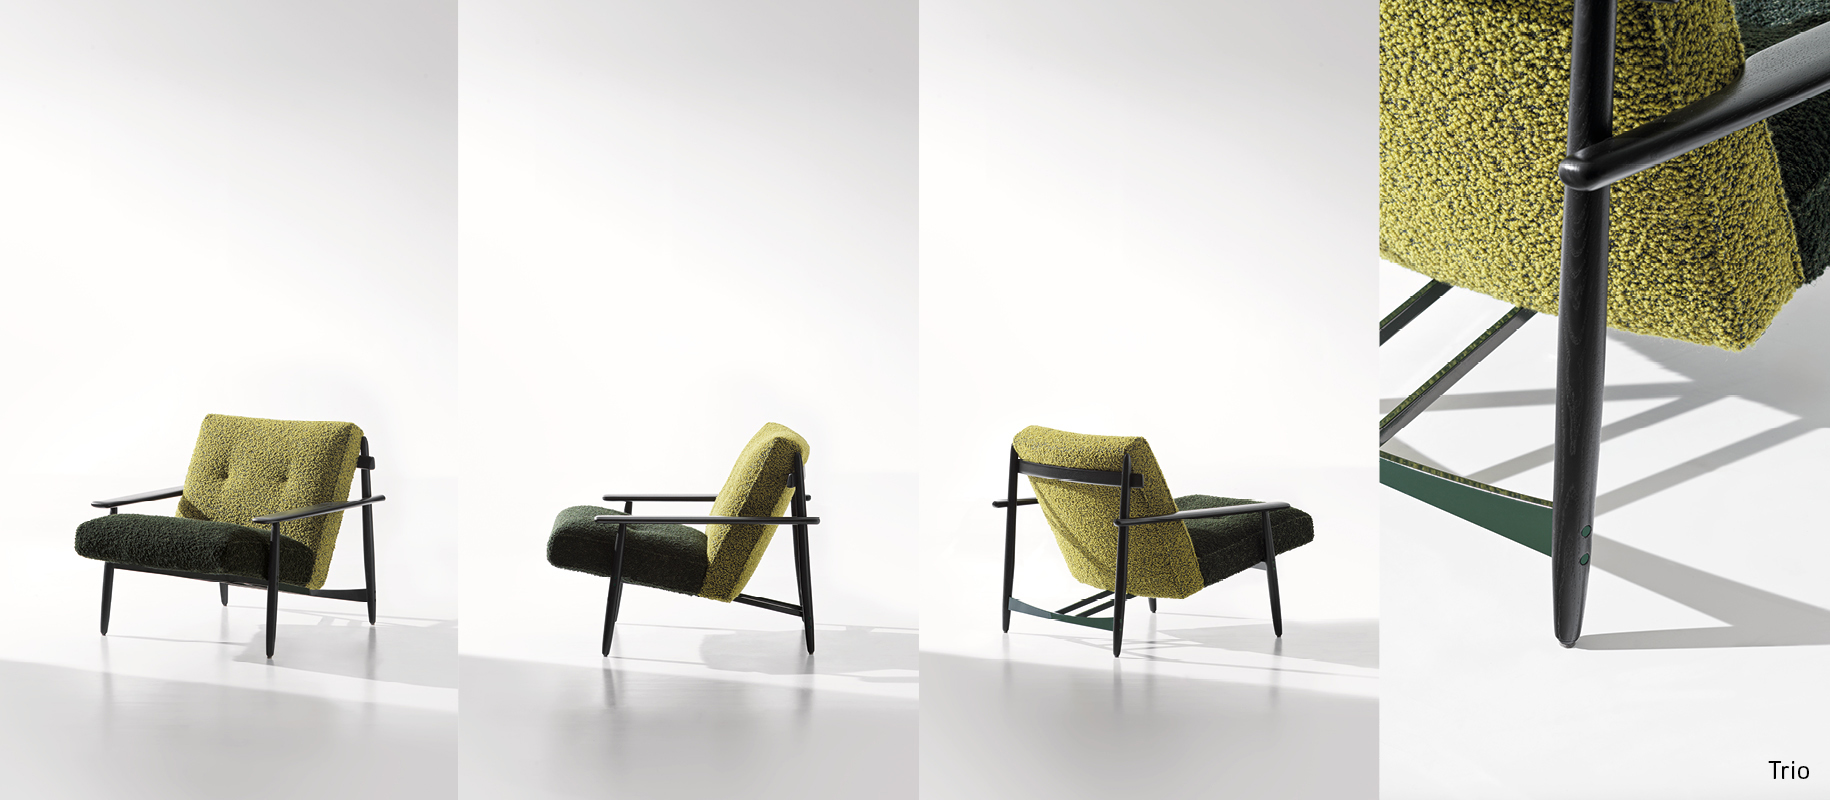 <p>Marcio Kogan为2024系列设计的<strong>Trio</strong>扶手椅将多种材料巧妙组合在一起，还推出了适用于户外环境的<strong>Trio Outdoor</strong>版本。</p>
